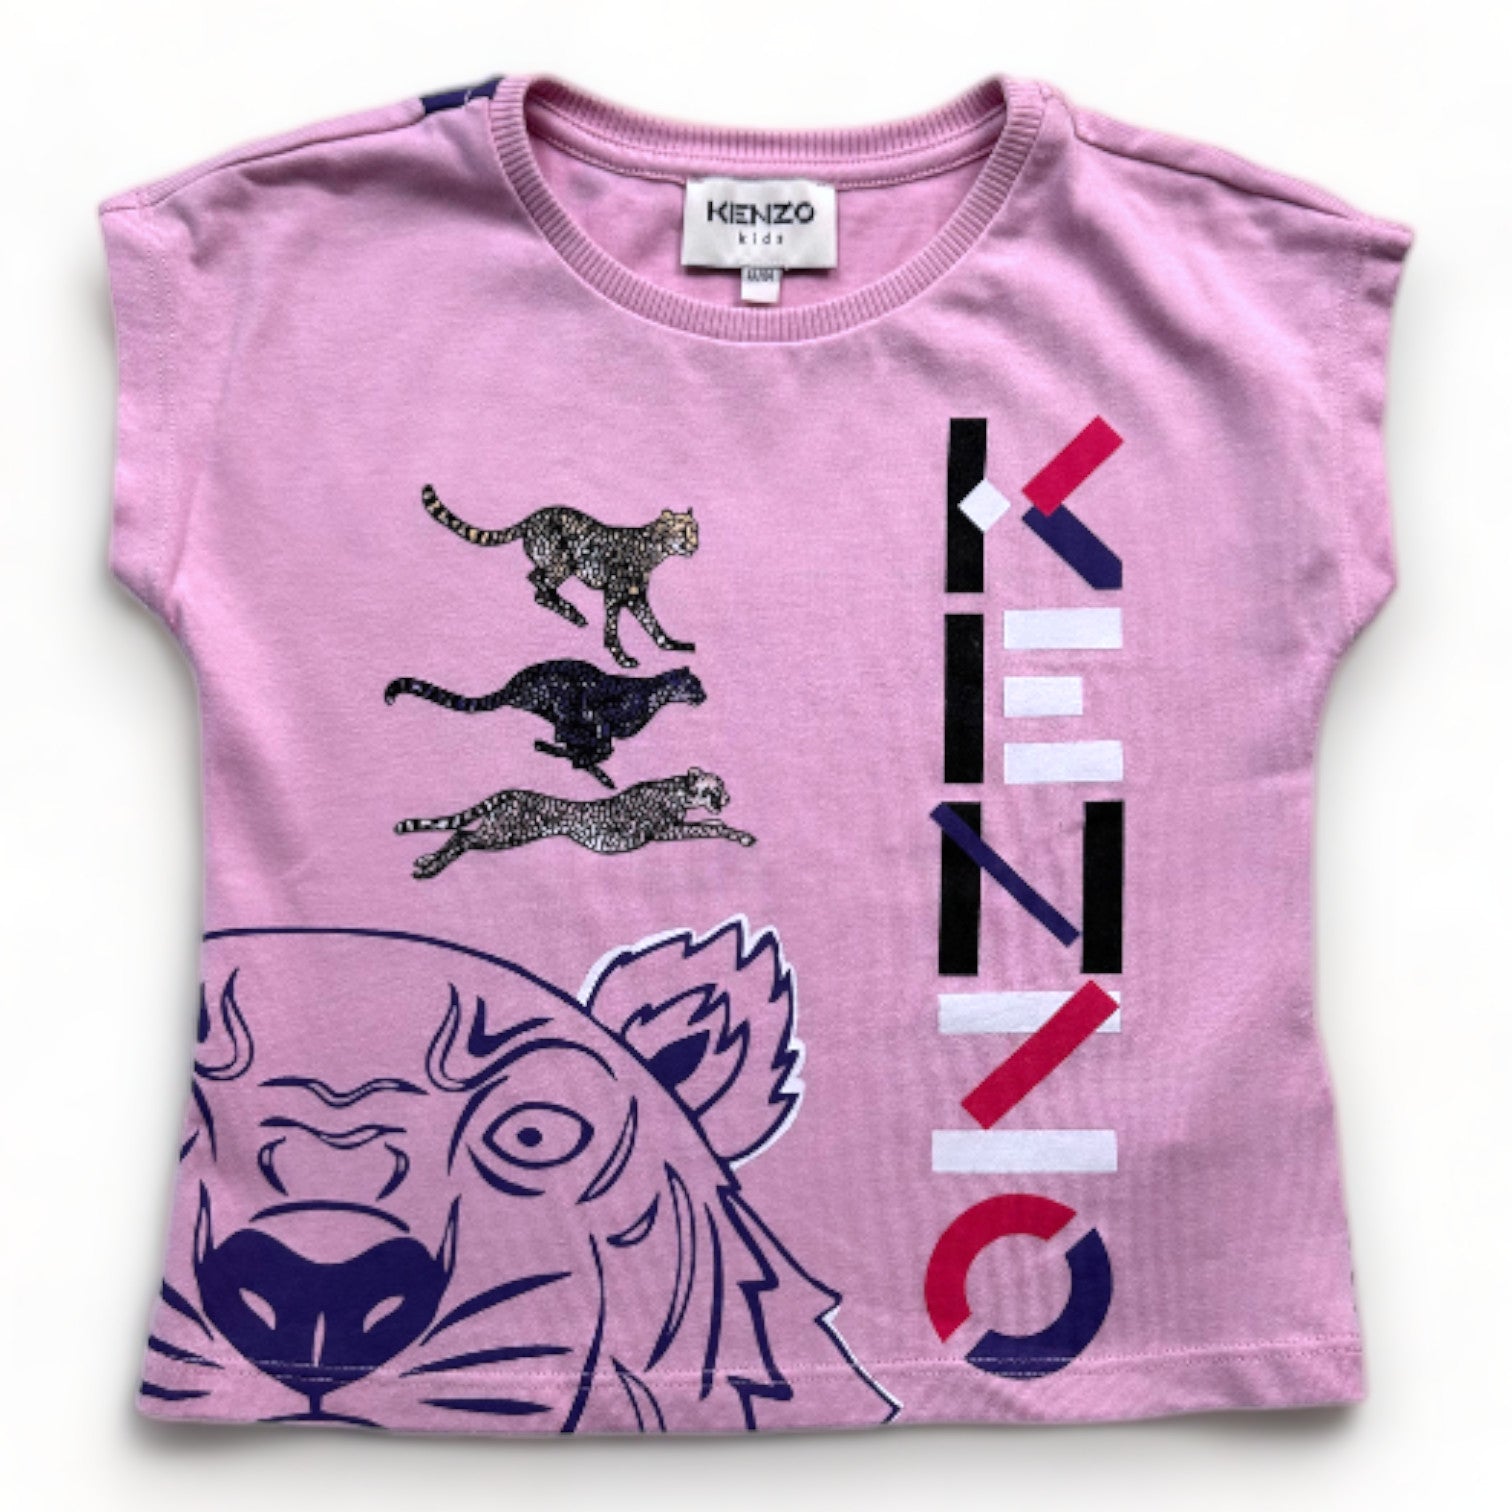 KENZO - T-shirt rose avec imprimés - 4 ans